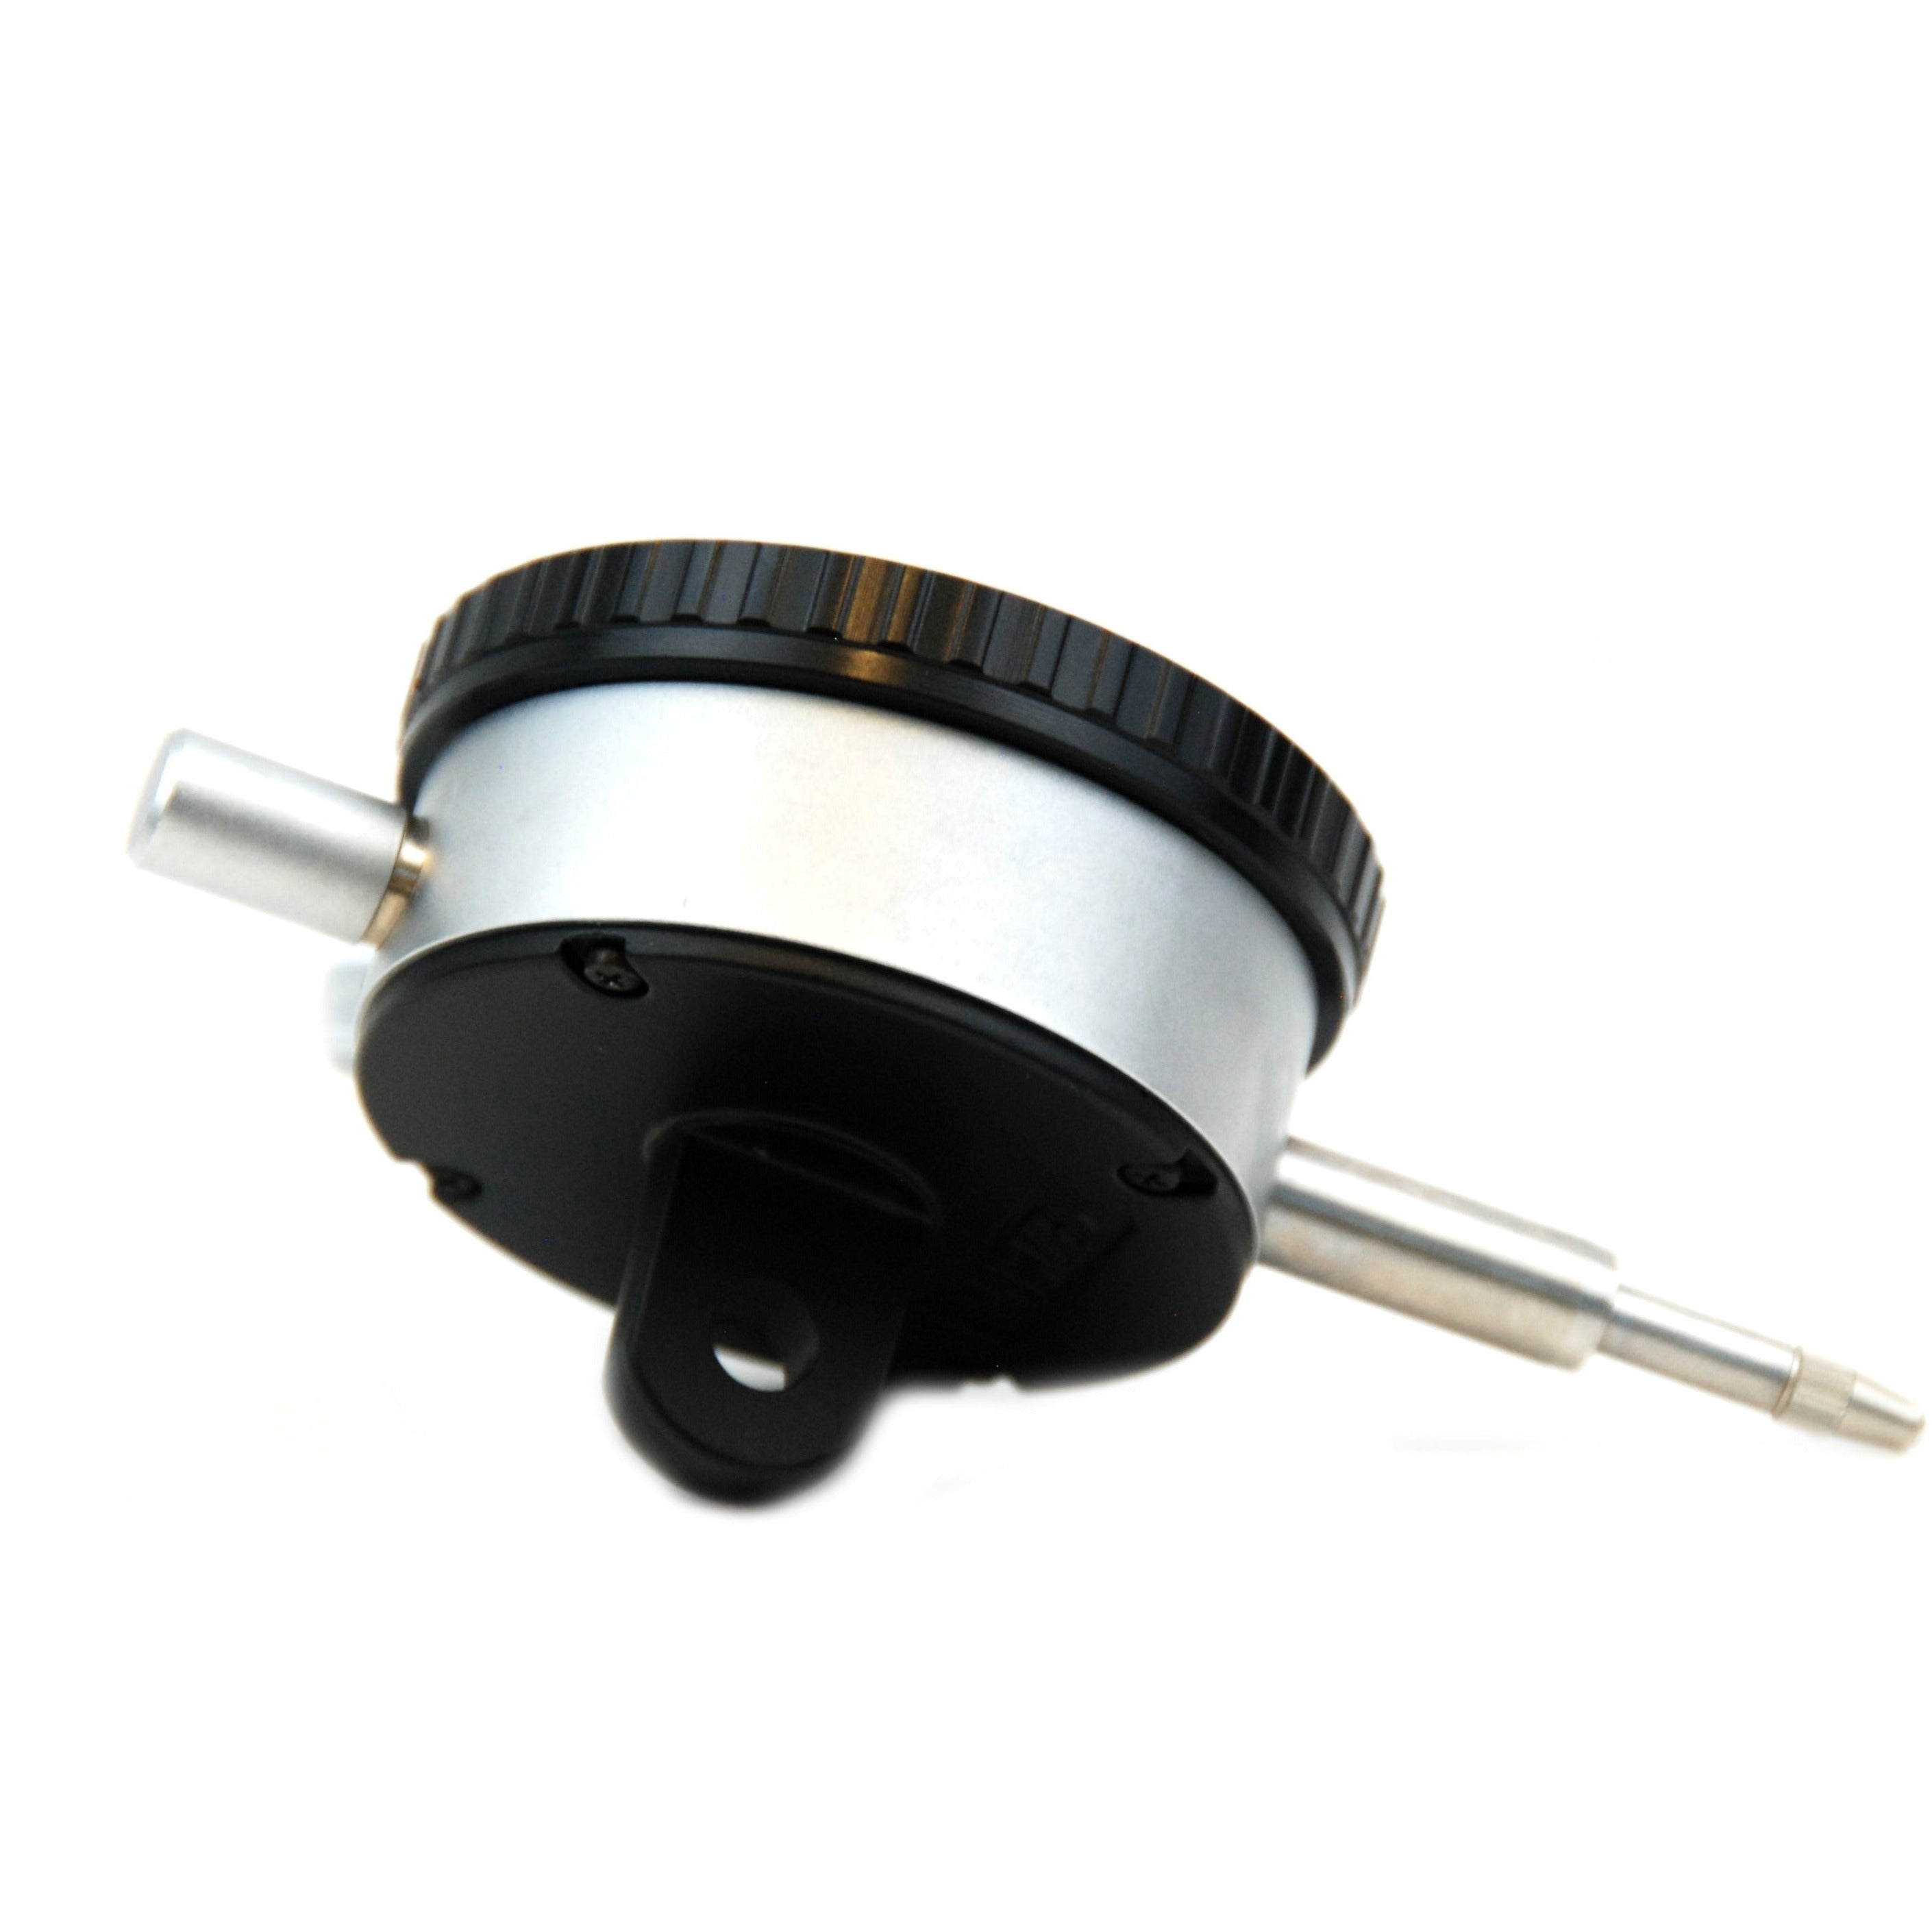 Insize Metric Lug Back Dial Indicator 3mm Range Series 2308-3A